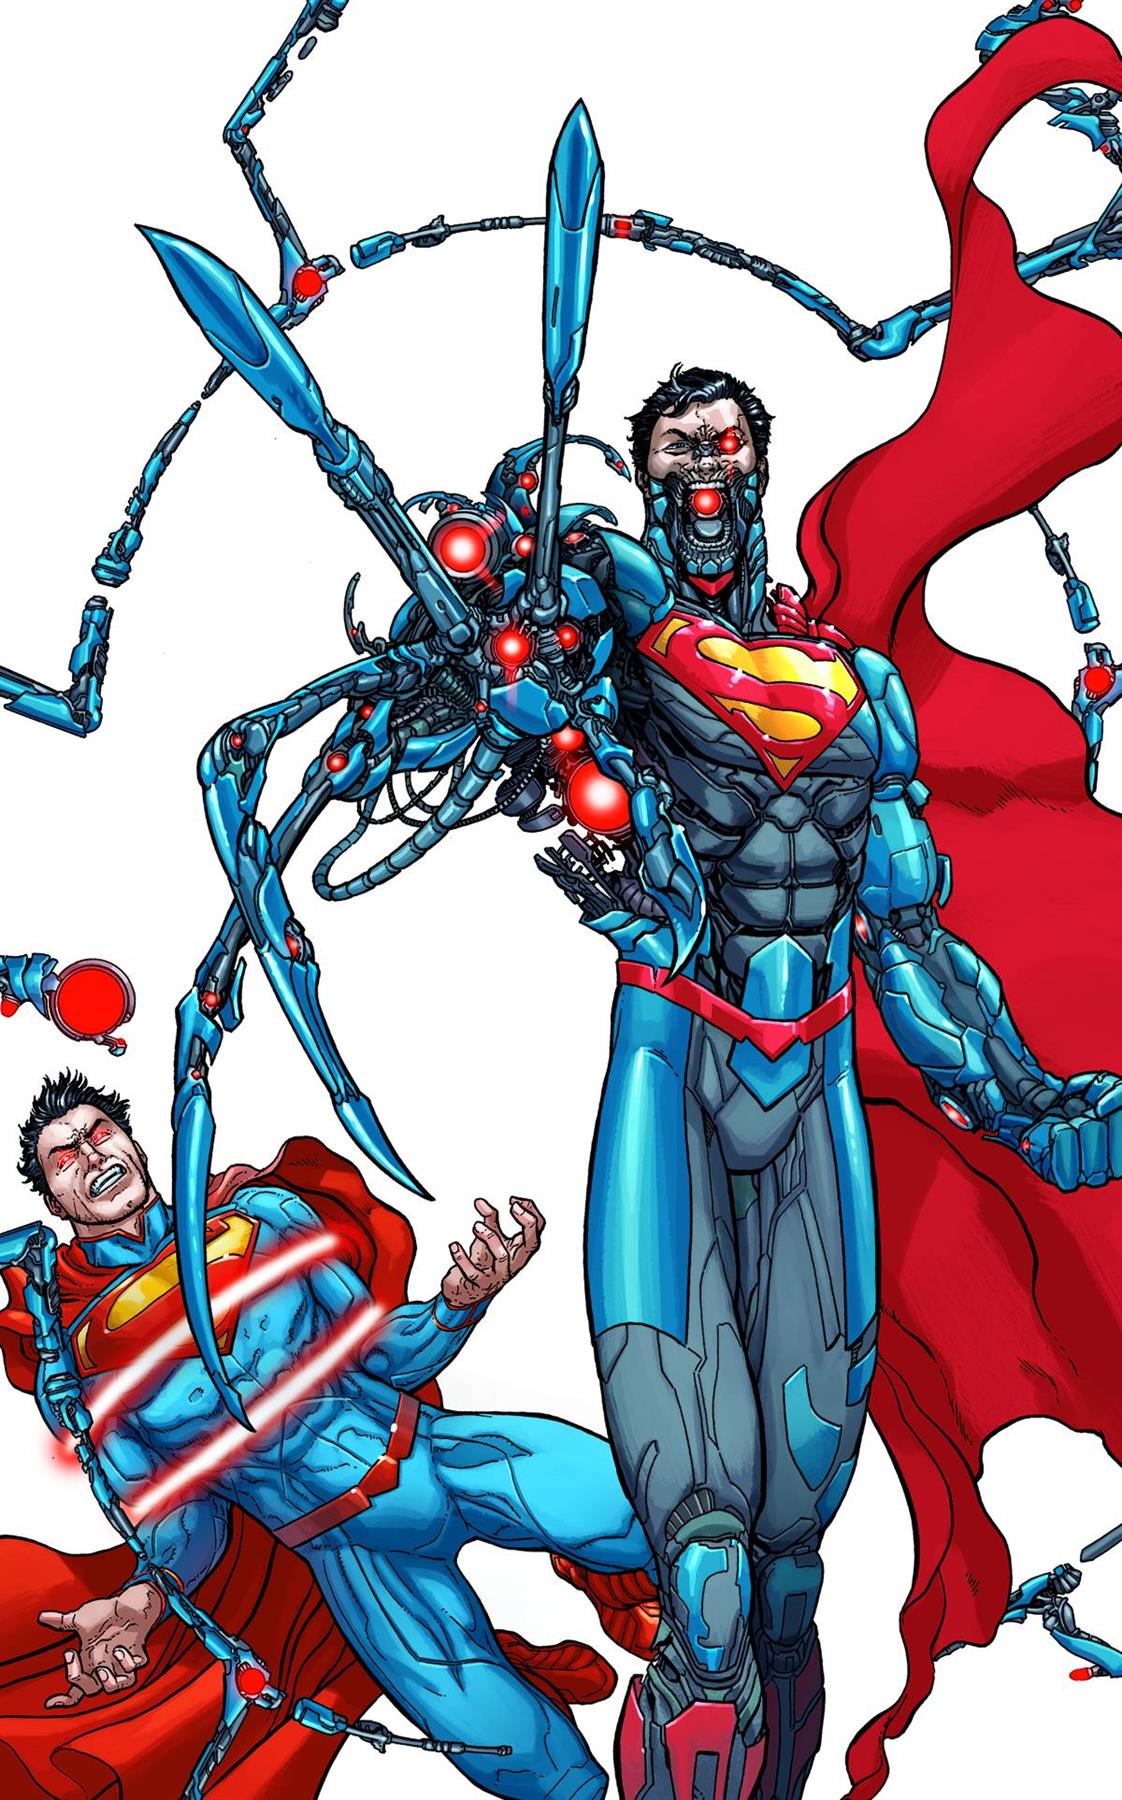 ACTION COMICS # 23.1 DC comic (Nov 2013) Cyborg Superman # 1 [Comic] Staff Writers